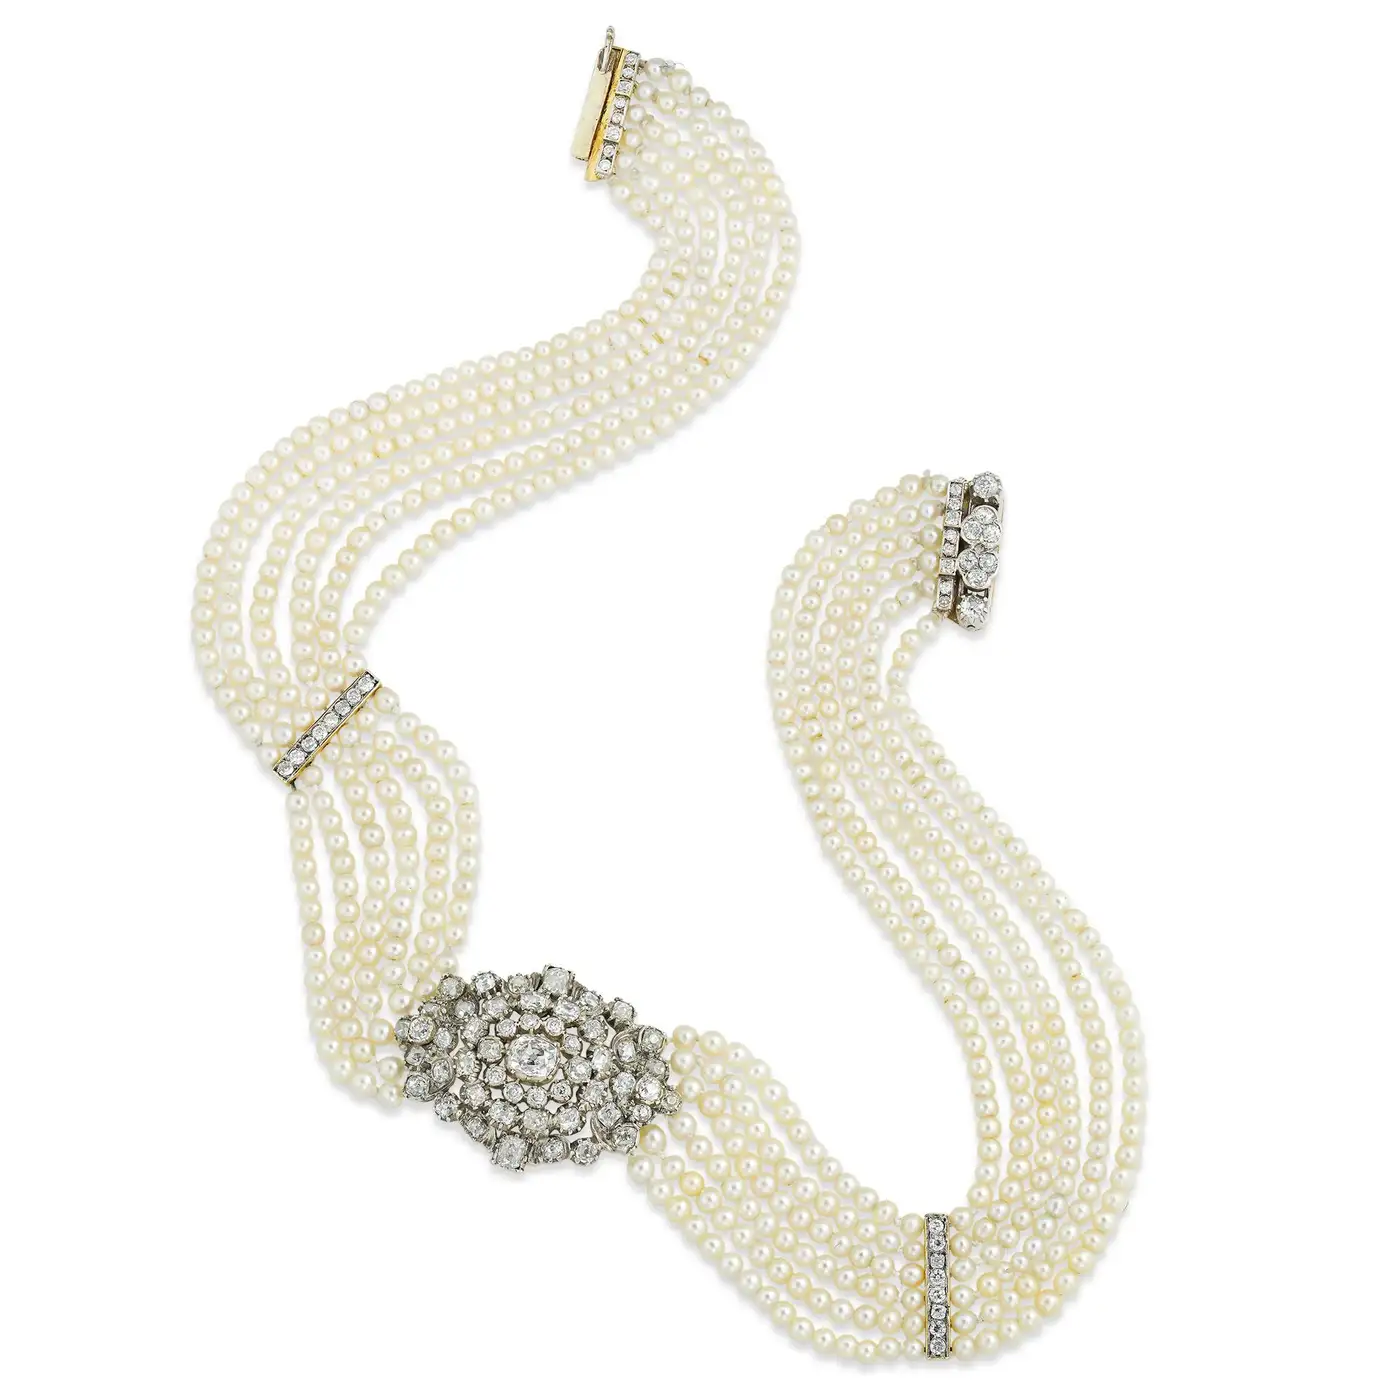 Late-Georgian-Six-Row-Natural-Pearl-and-Diamond-Collar-Necklace-3.webp